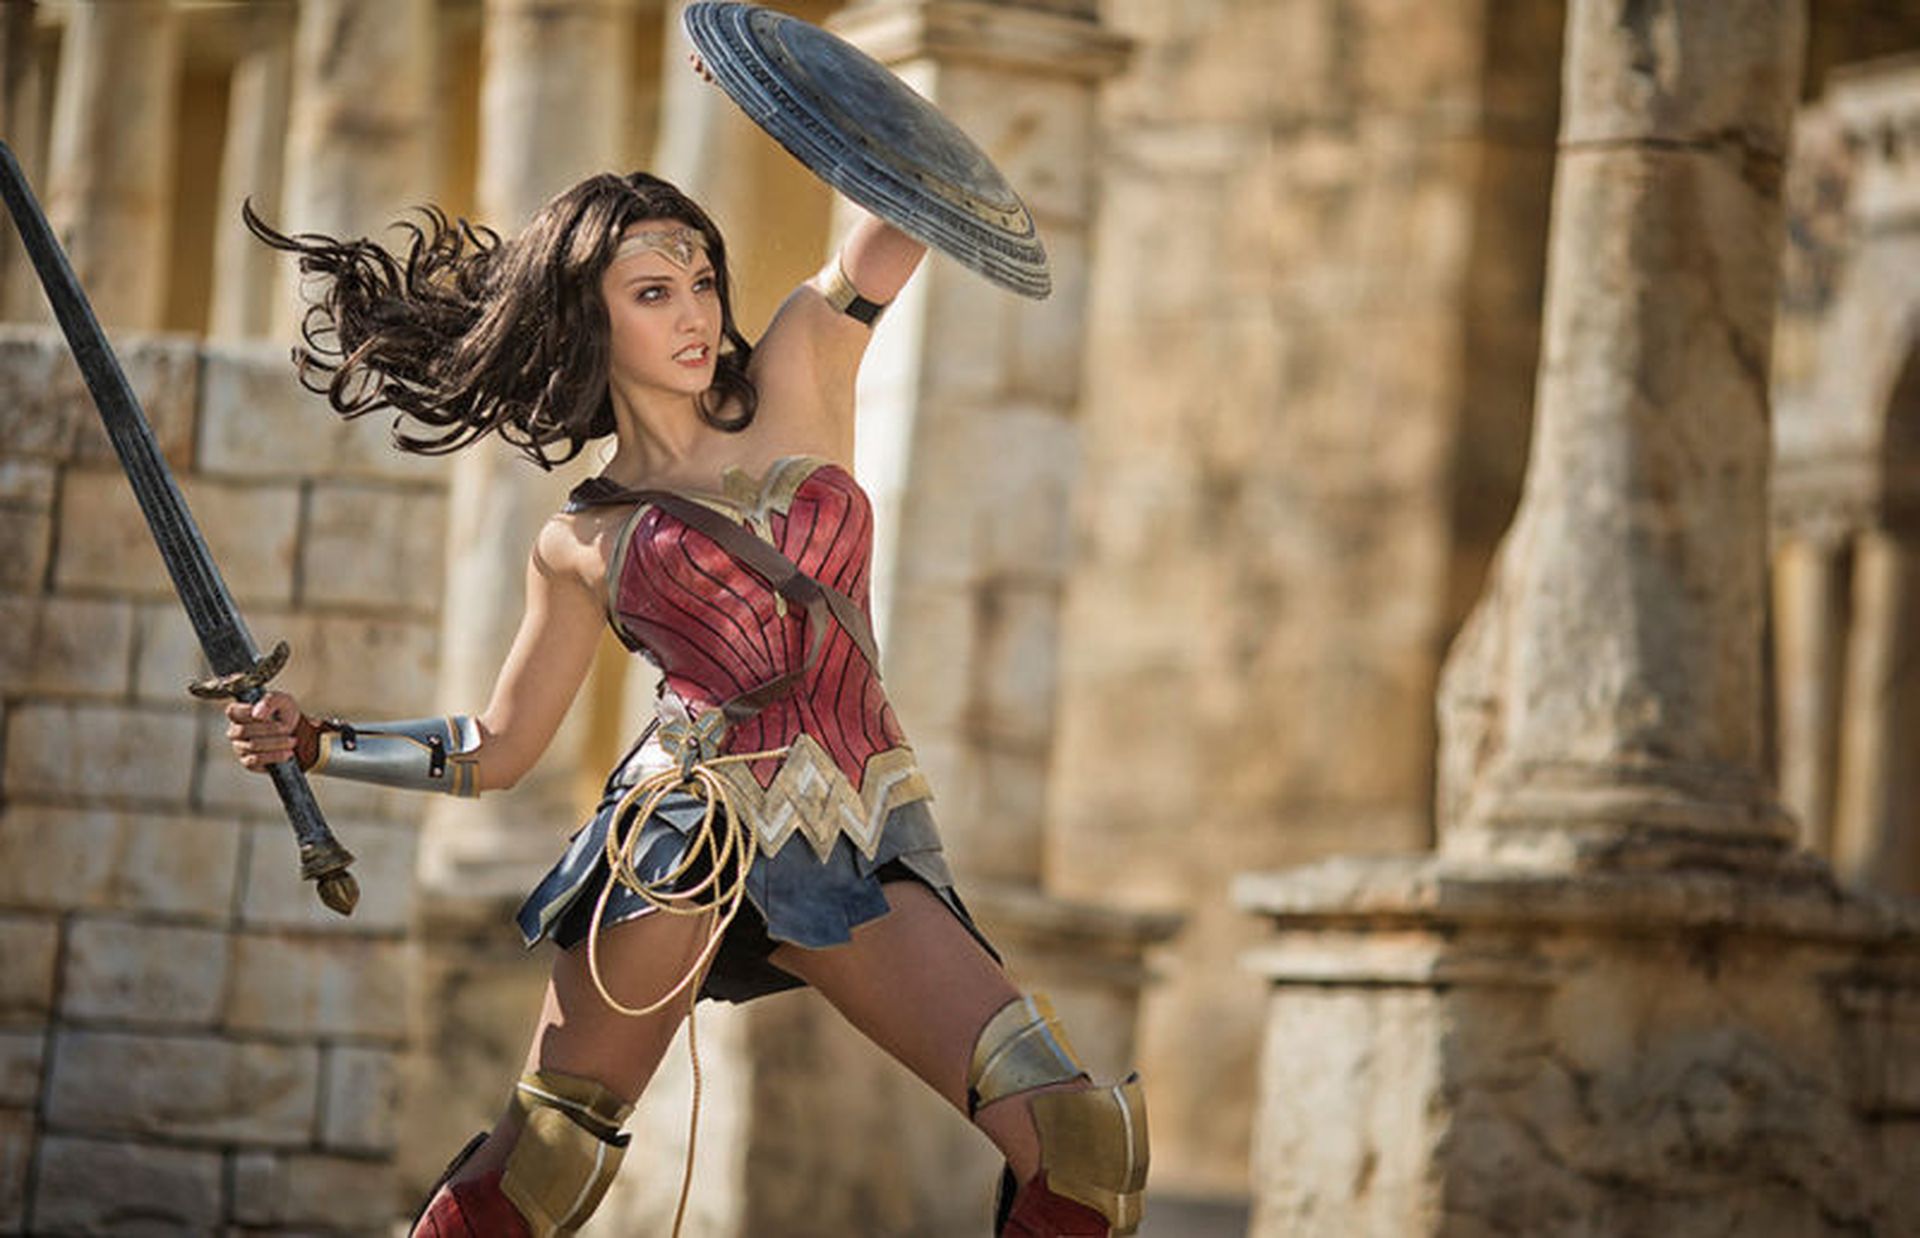 Wonder Woman cosplayer